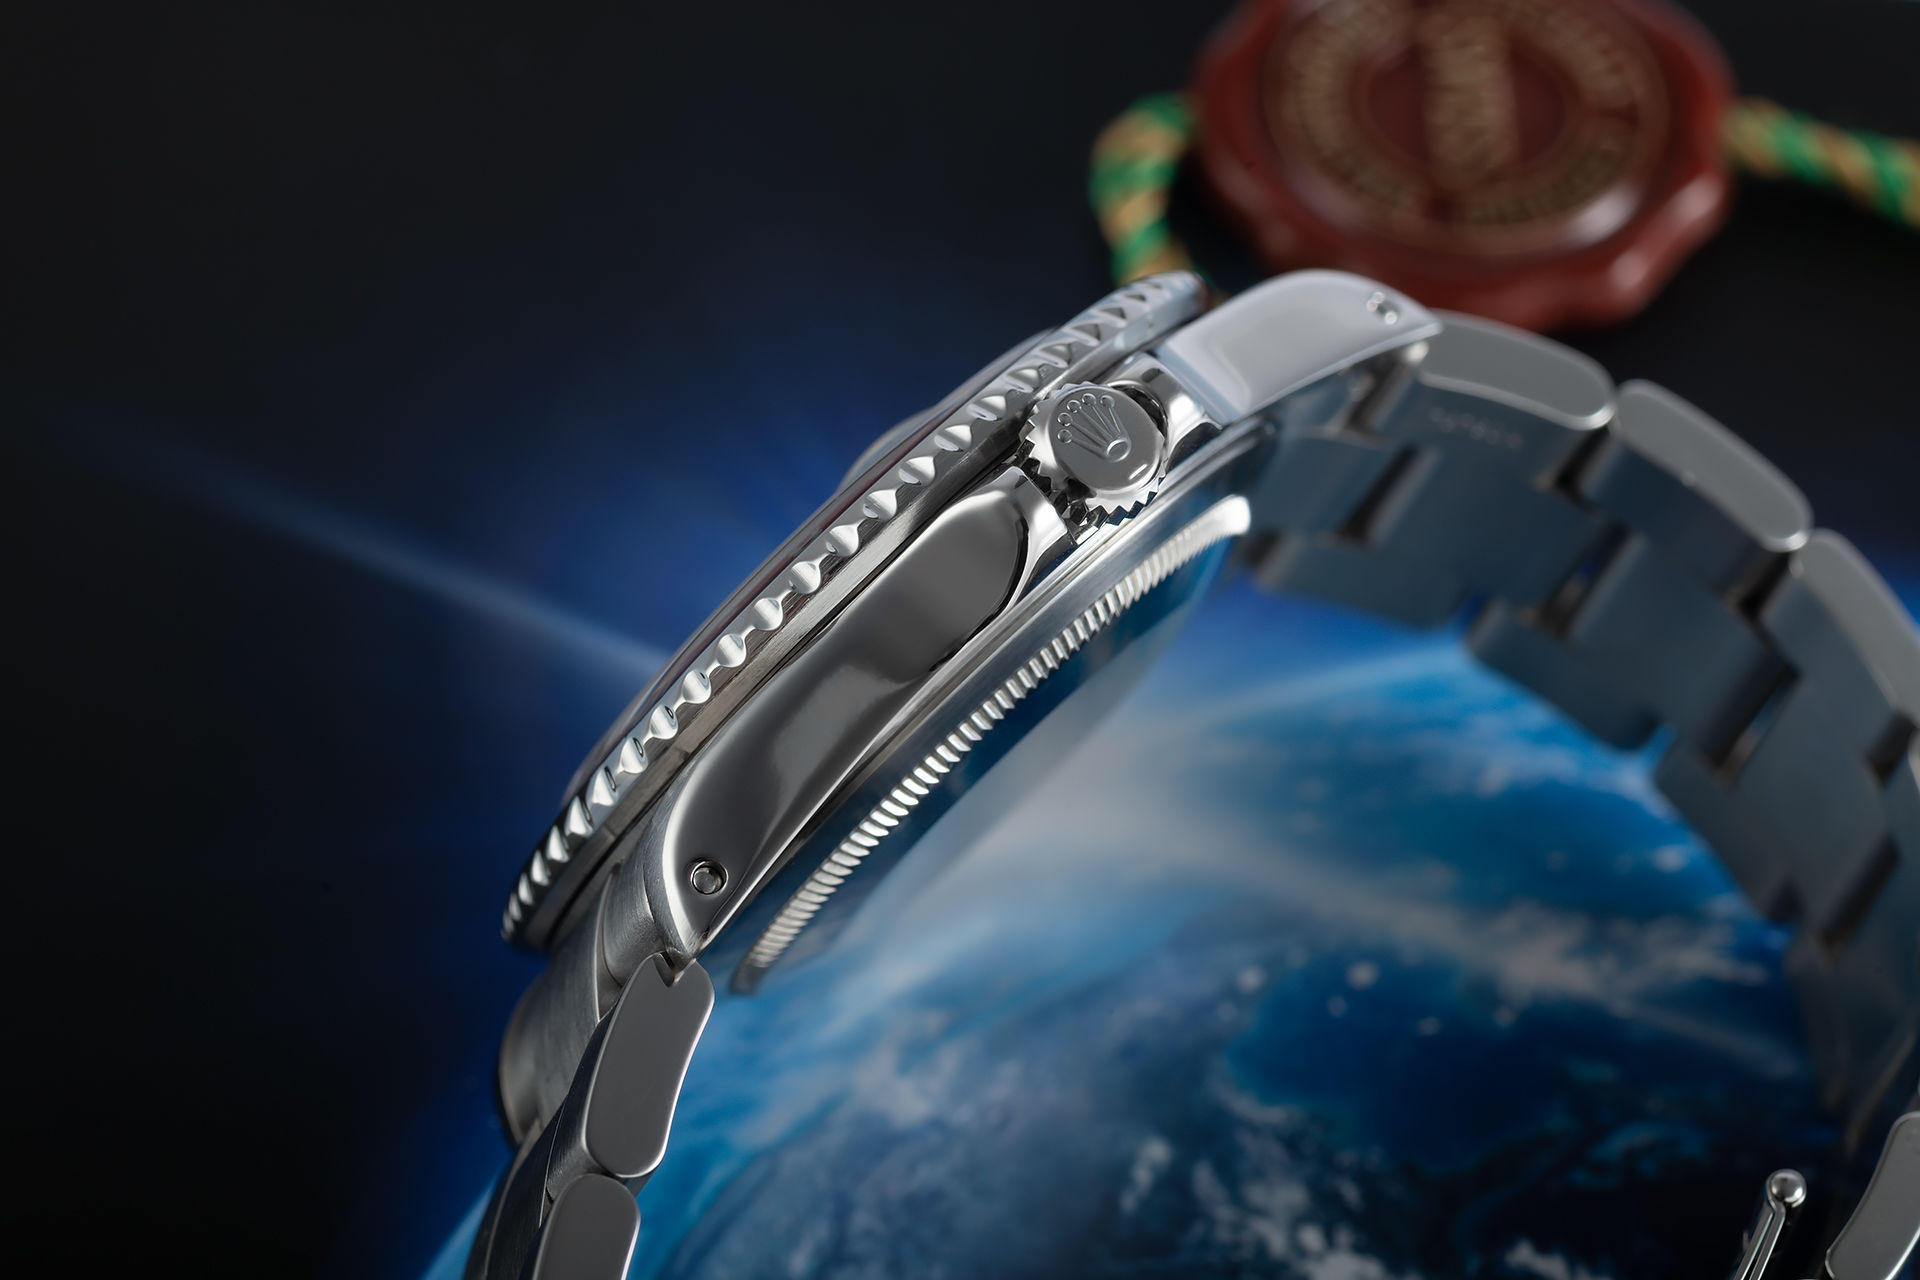 ref 16710 | 'Complete Set' Triple Timezone | Rolex GMT-Master II